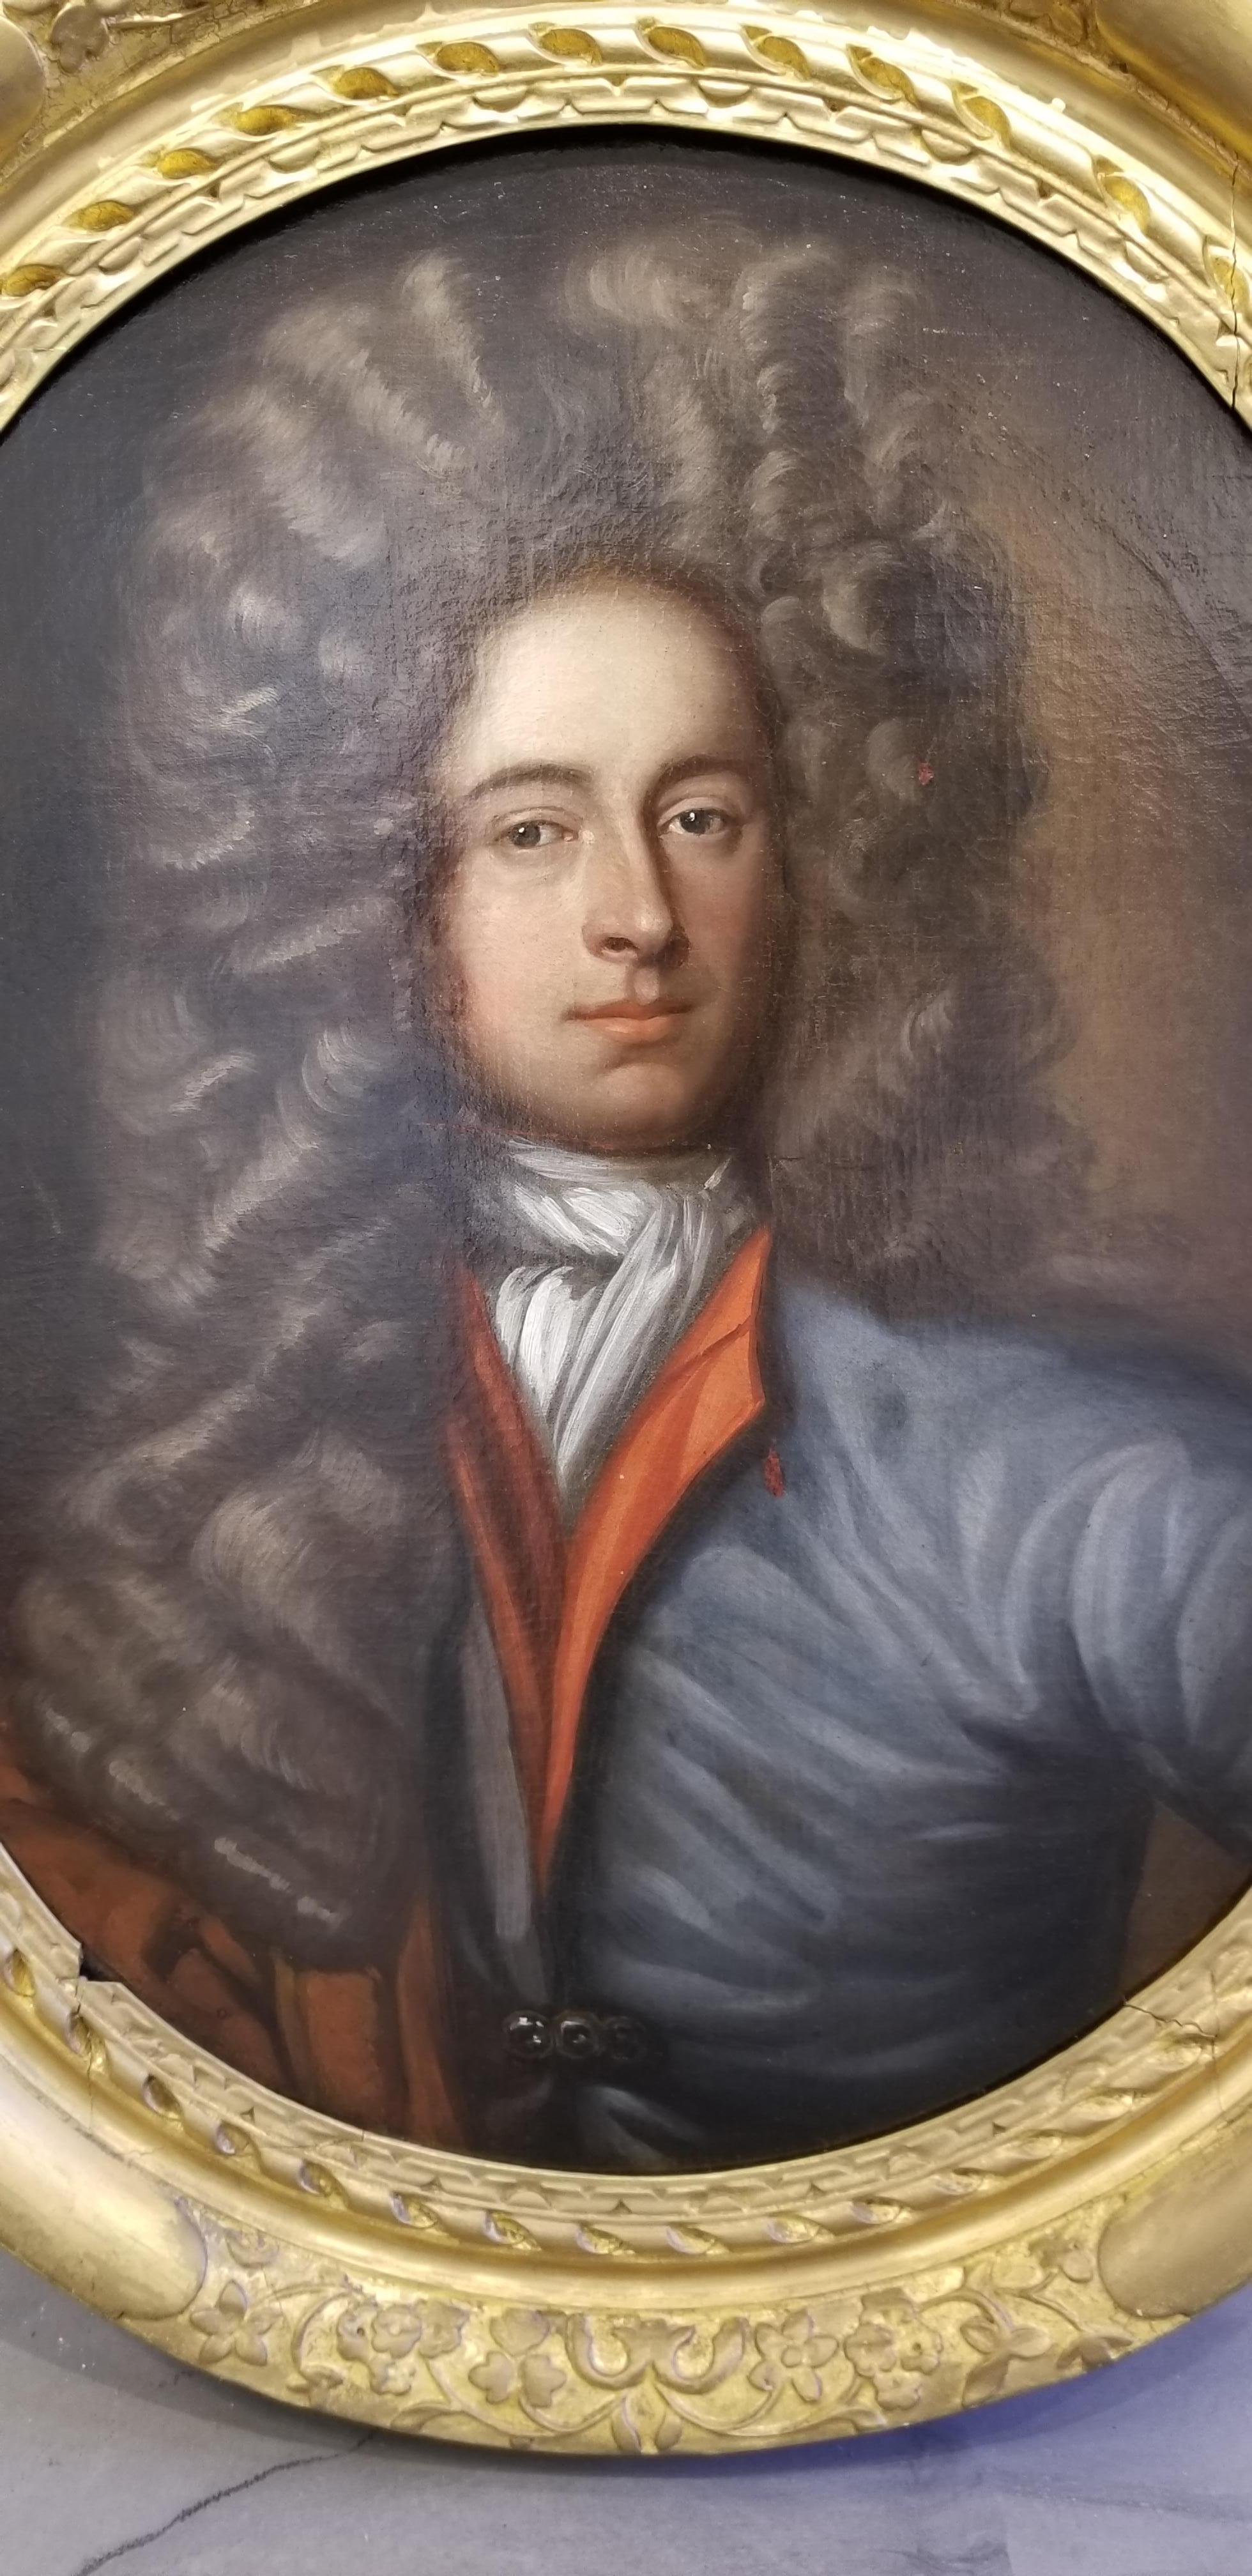 18th century nobleman